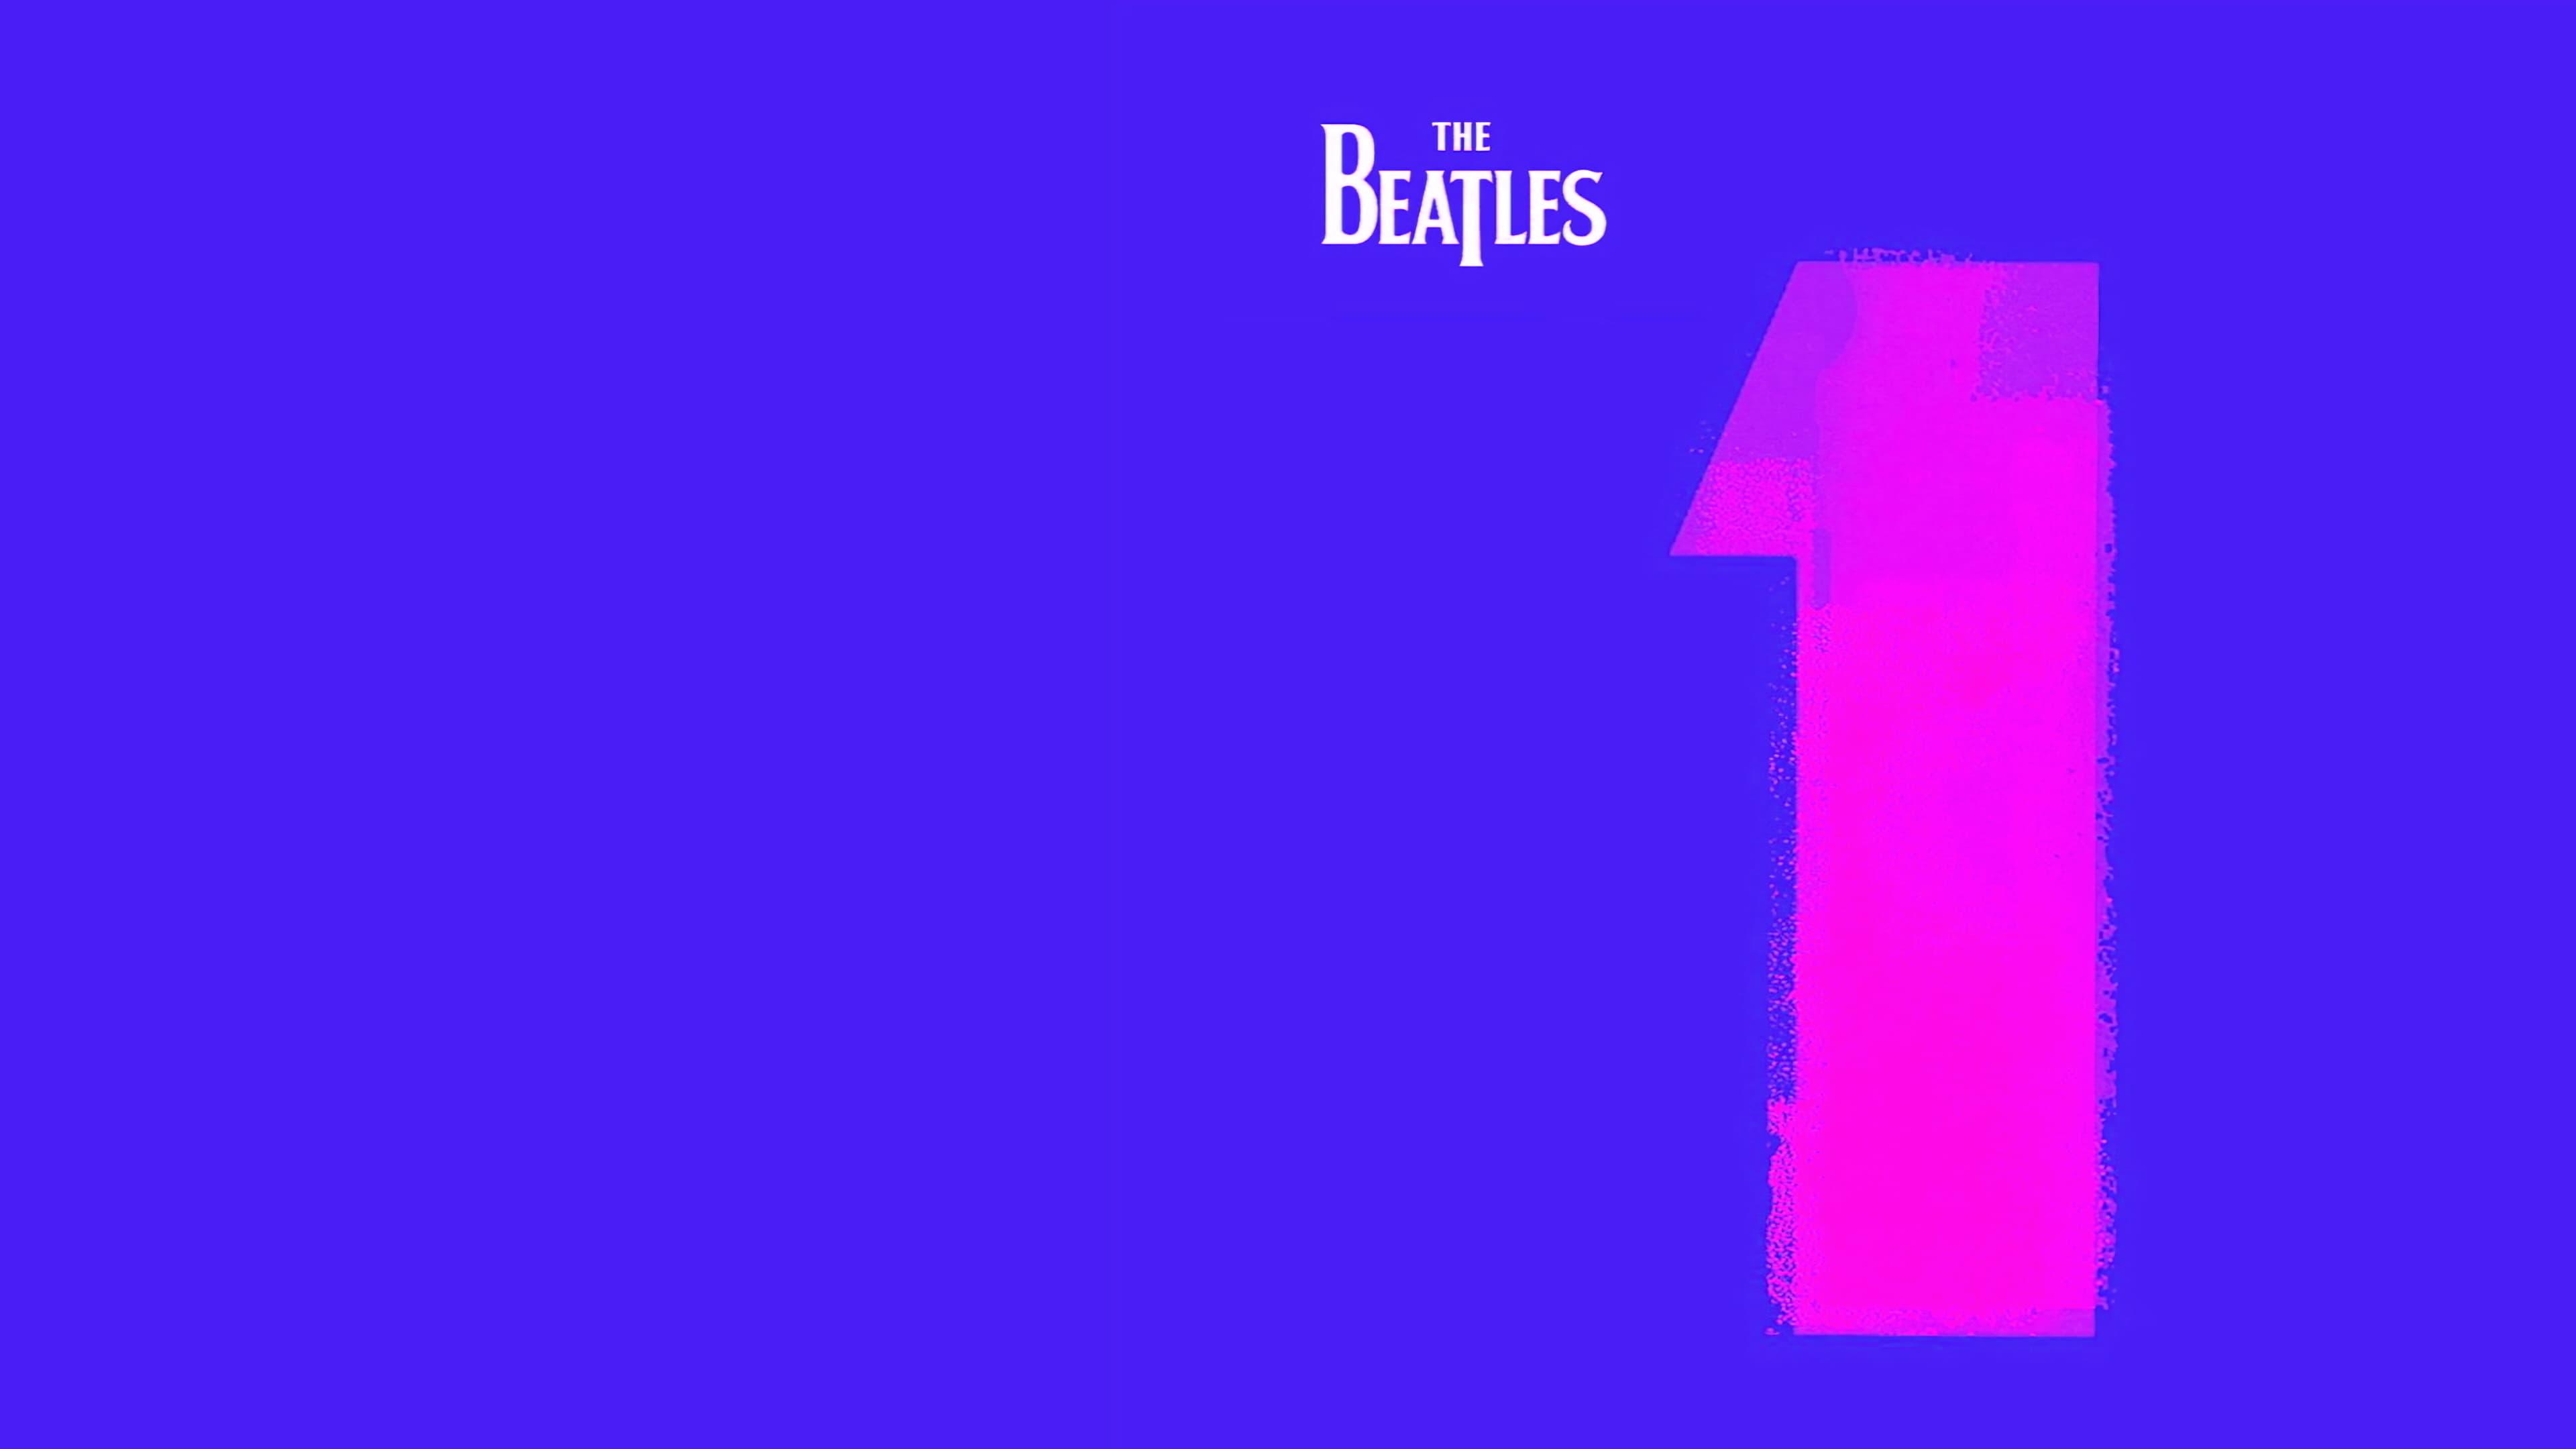 The Beatles 1 backdrop